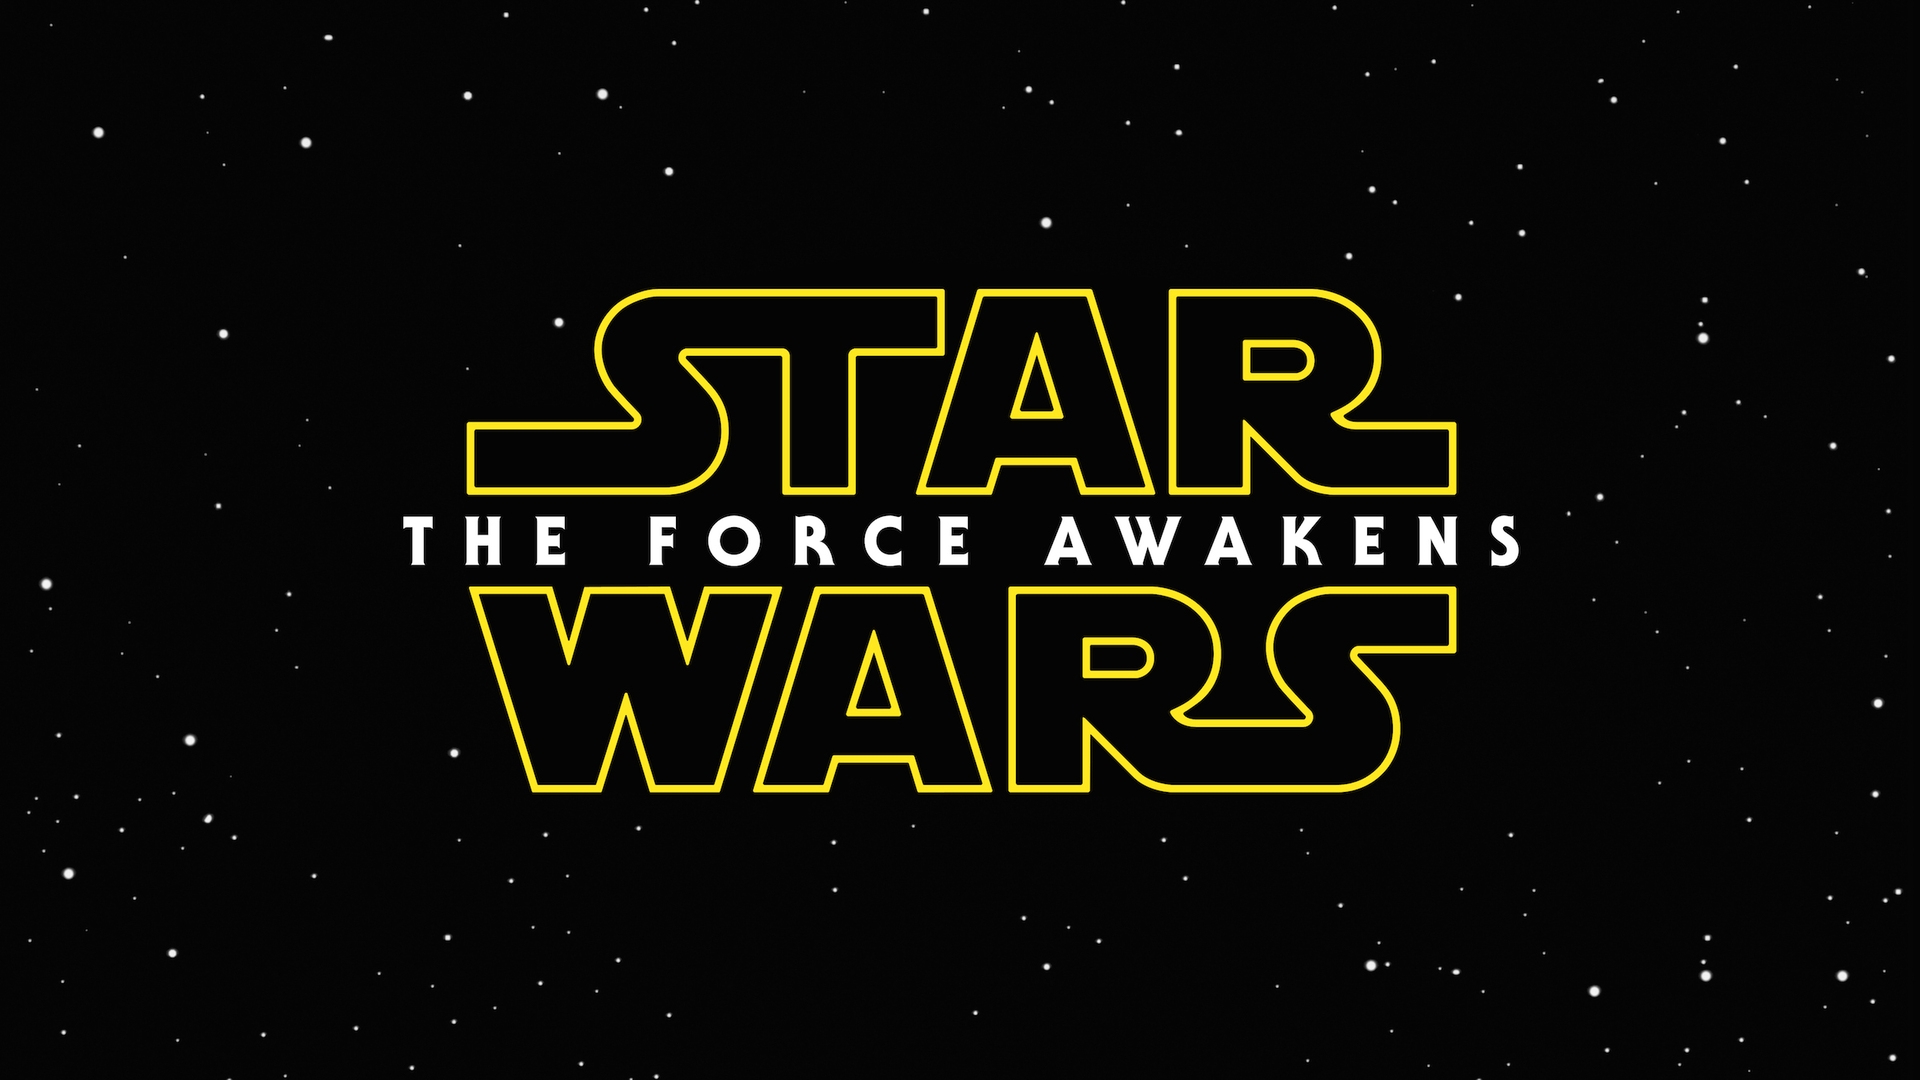 Star Wars The Force Awakens Logo for 1920 x 1080 HDTV 1080p resolution